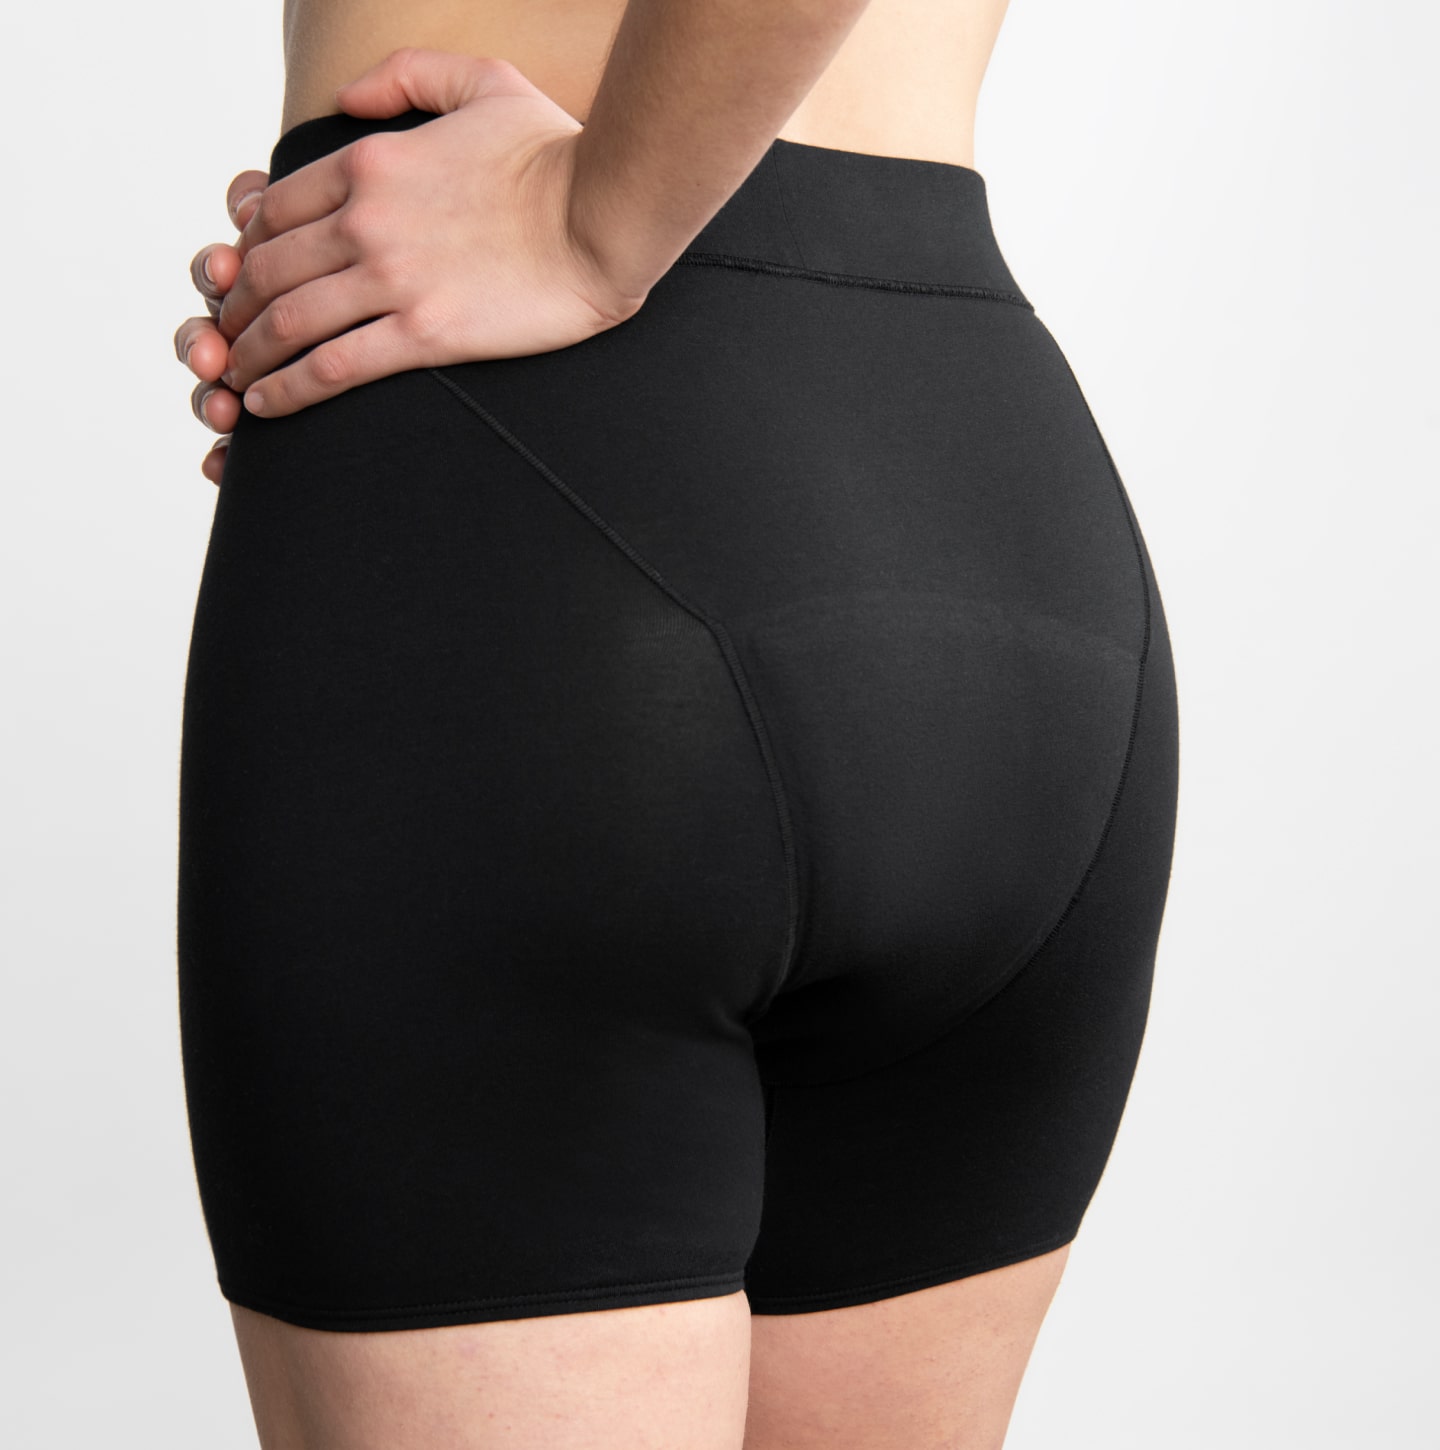 Leovqn Period Boyshorts Heavy Flow Period Shorts for Women Leakproof  Menstrual Panties Period Underwear for Women - Beige XS at  Women's  Clothing store